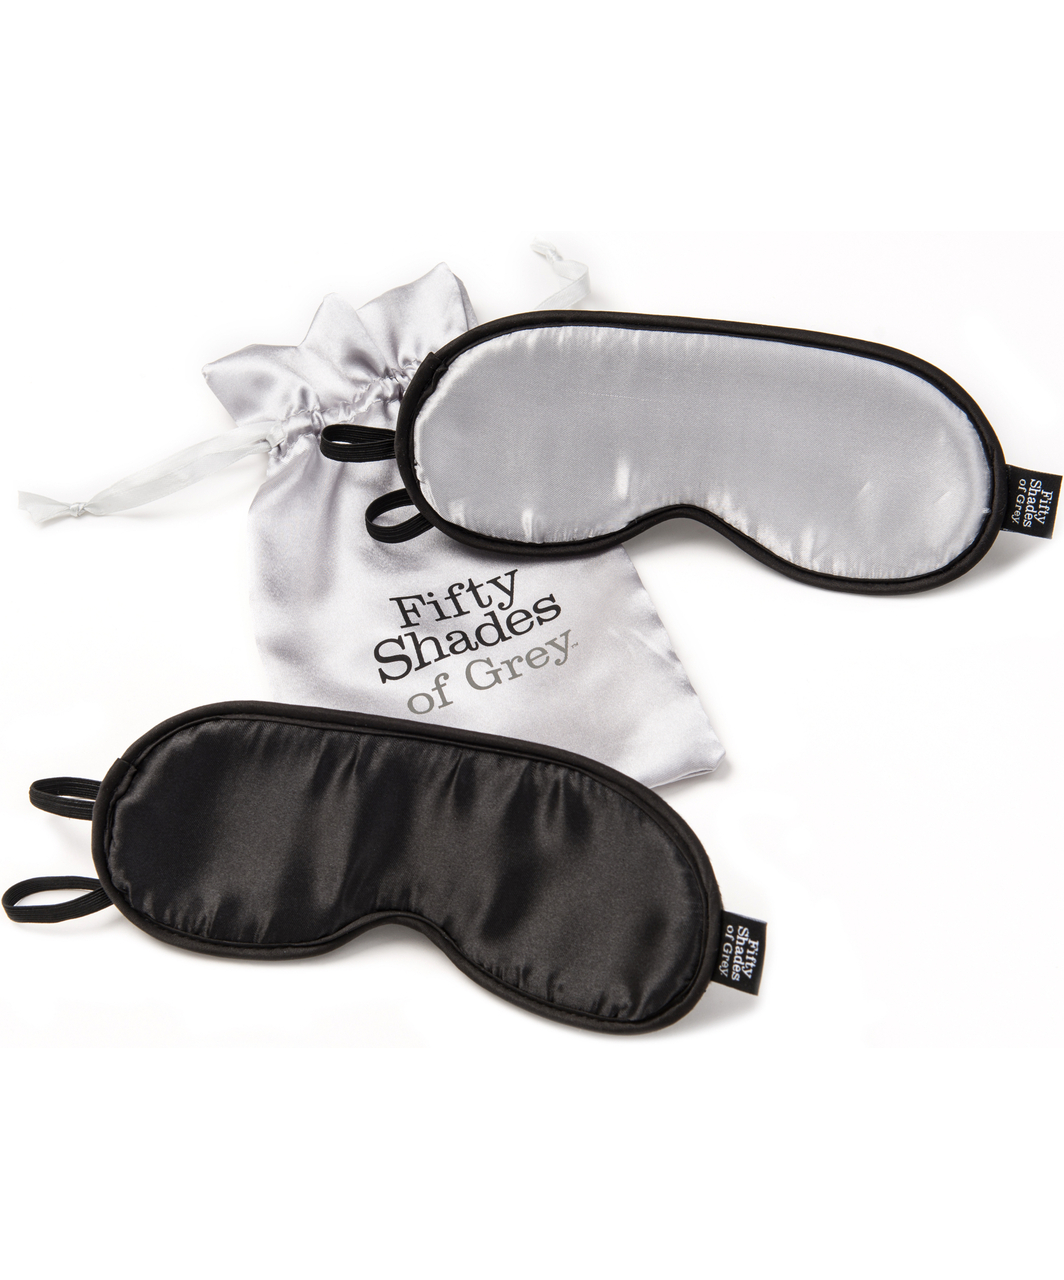 Fifty Shades of Grey No Peeking Soft Twin Blindfold komplekt